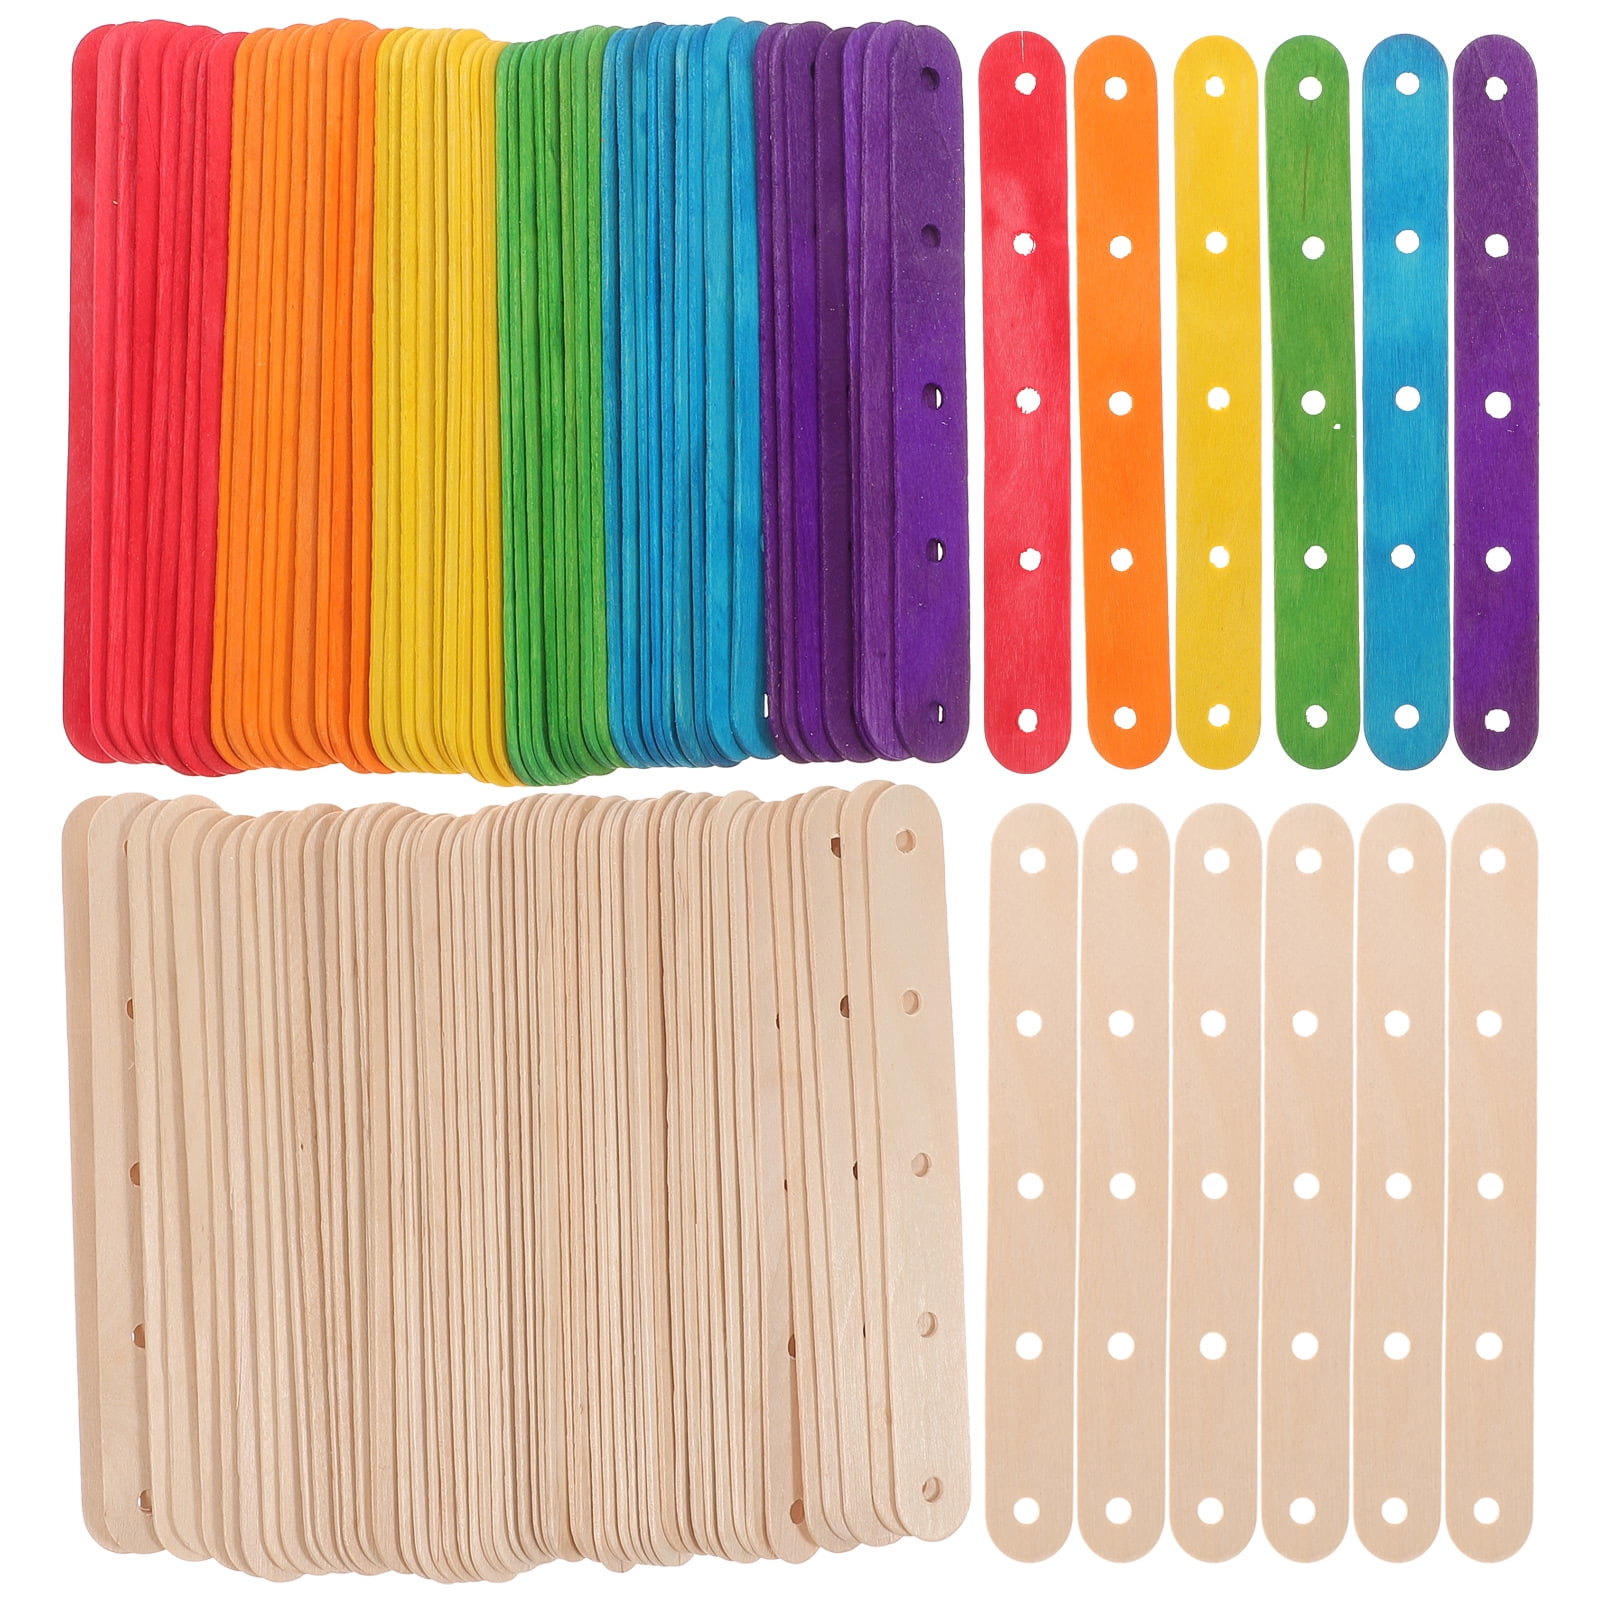 BESTONZON 100PCS Natural Jumbo Colored Wood Craft Sticks Popsicle Wood  Colored Craft Stick for DIY Crafts Creative Designs (Colorful+Nature Color)  